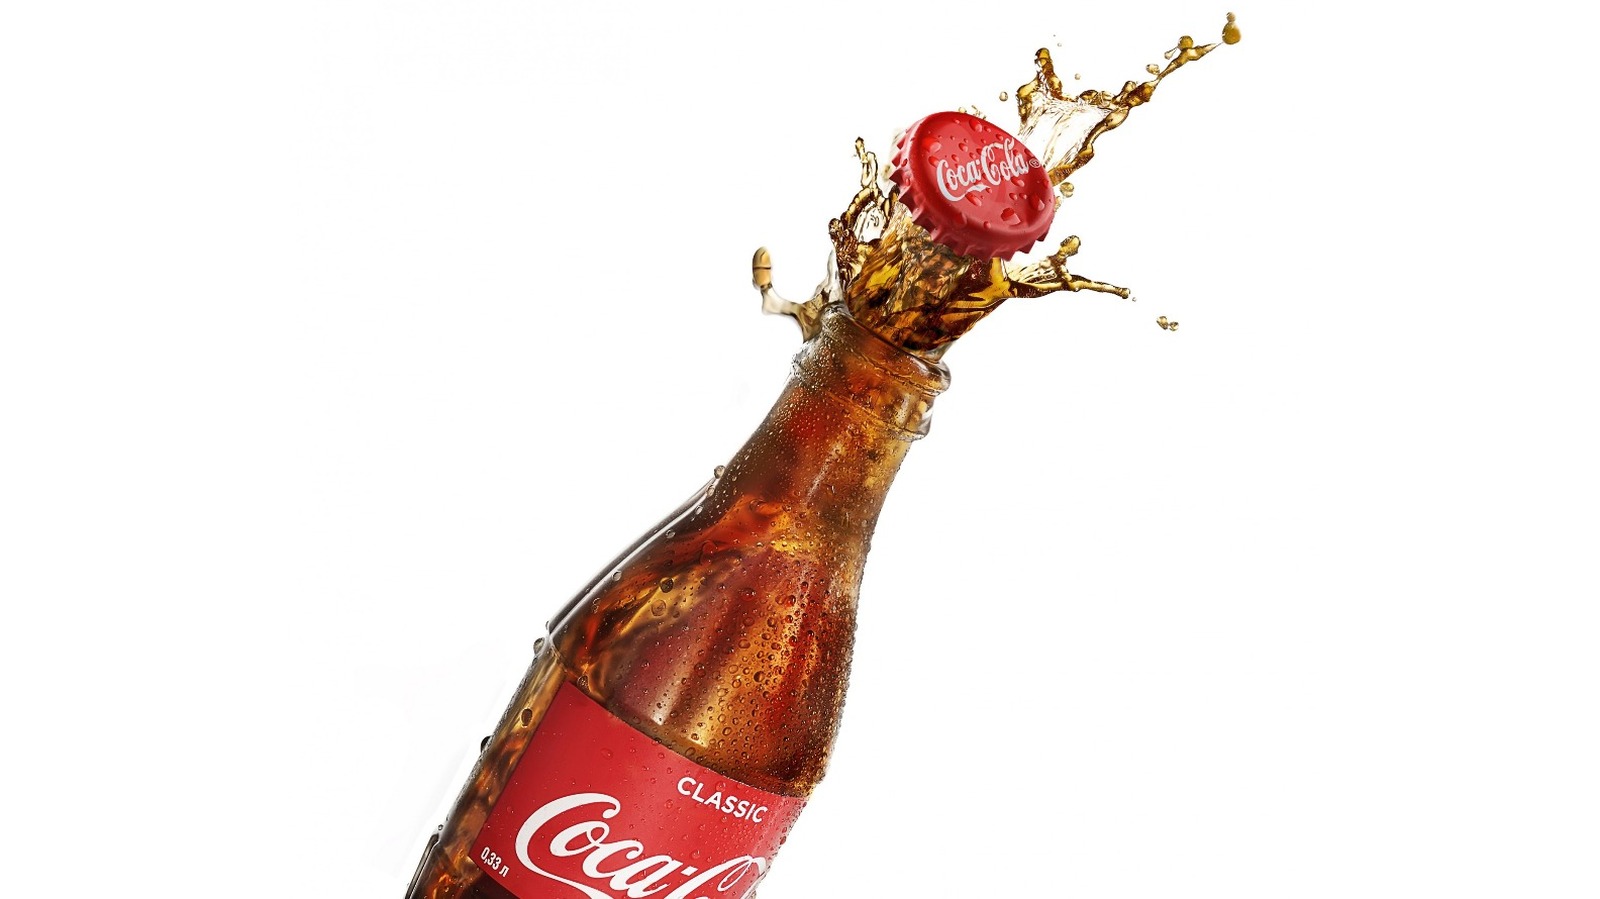 Why does coke taste better in glass? - Friends of Glass